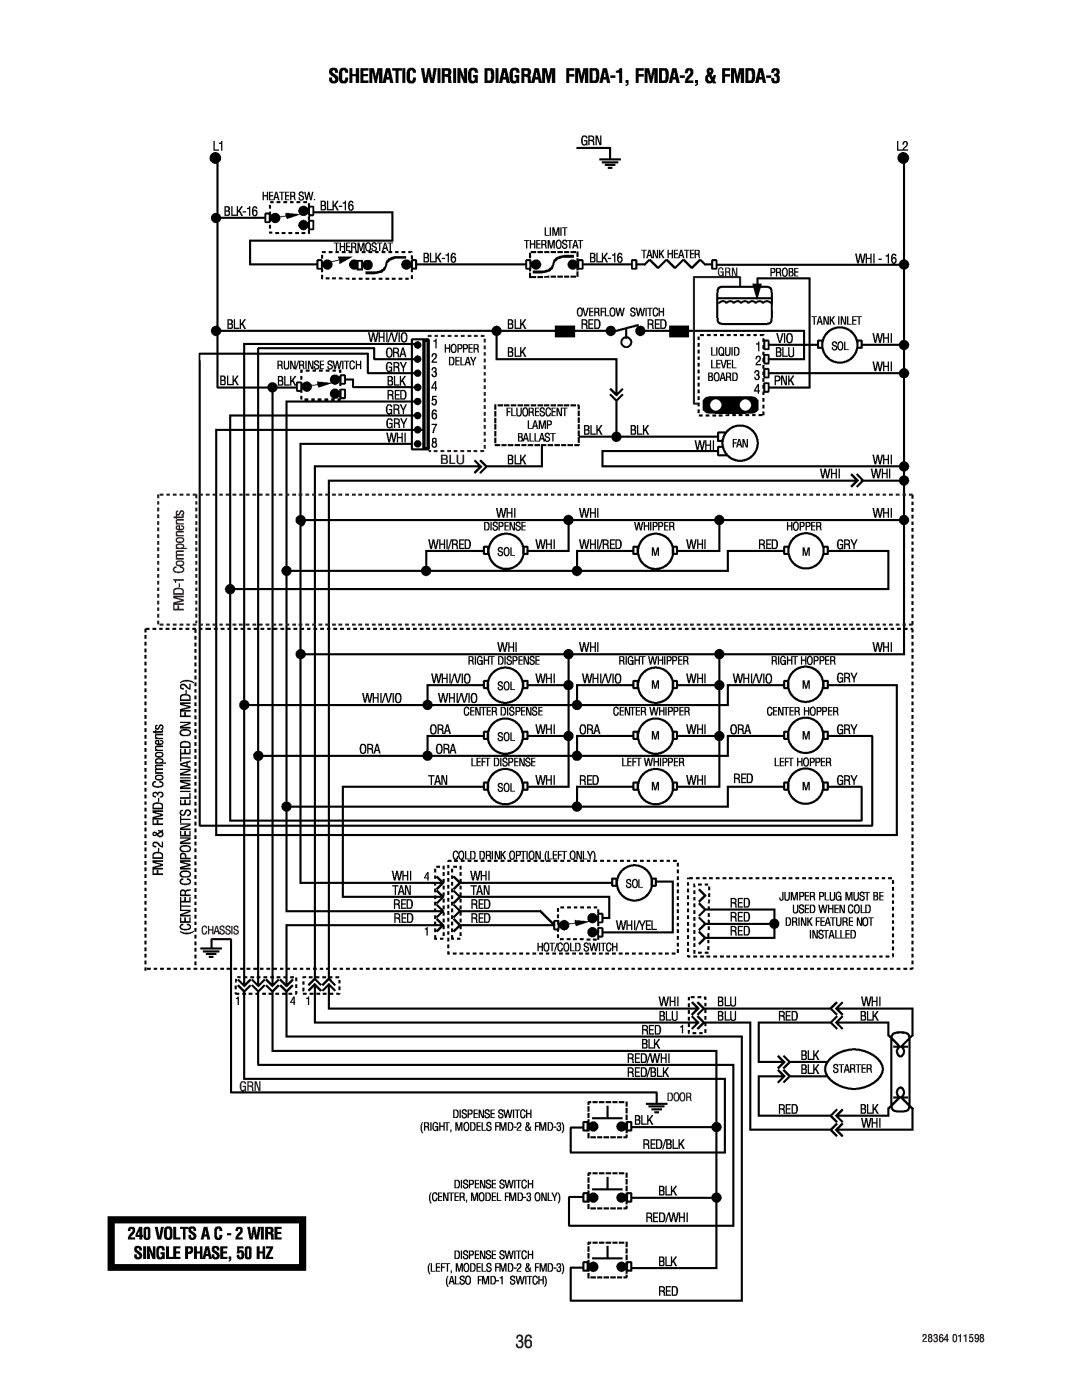 Bunn FMD-3 service manual SCHEMATIC WIRING DIAGRAM FMDA-1, FMDA-2,& FMDA-3, FMD-1Components, FMD-2 